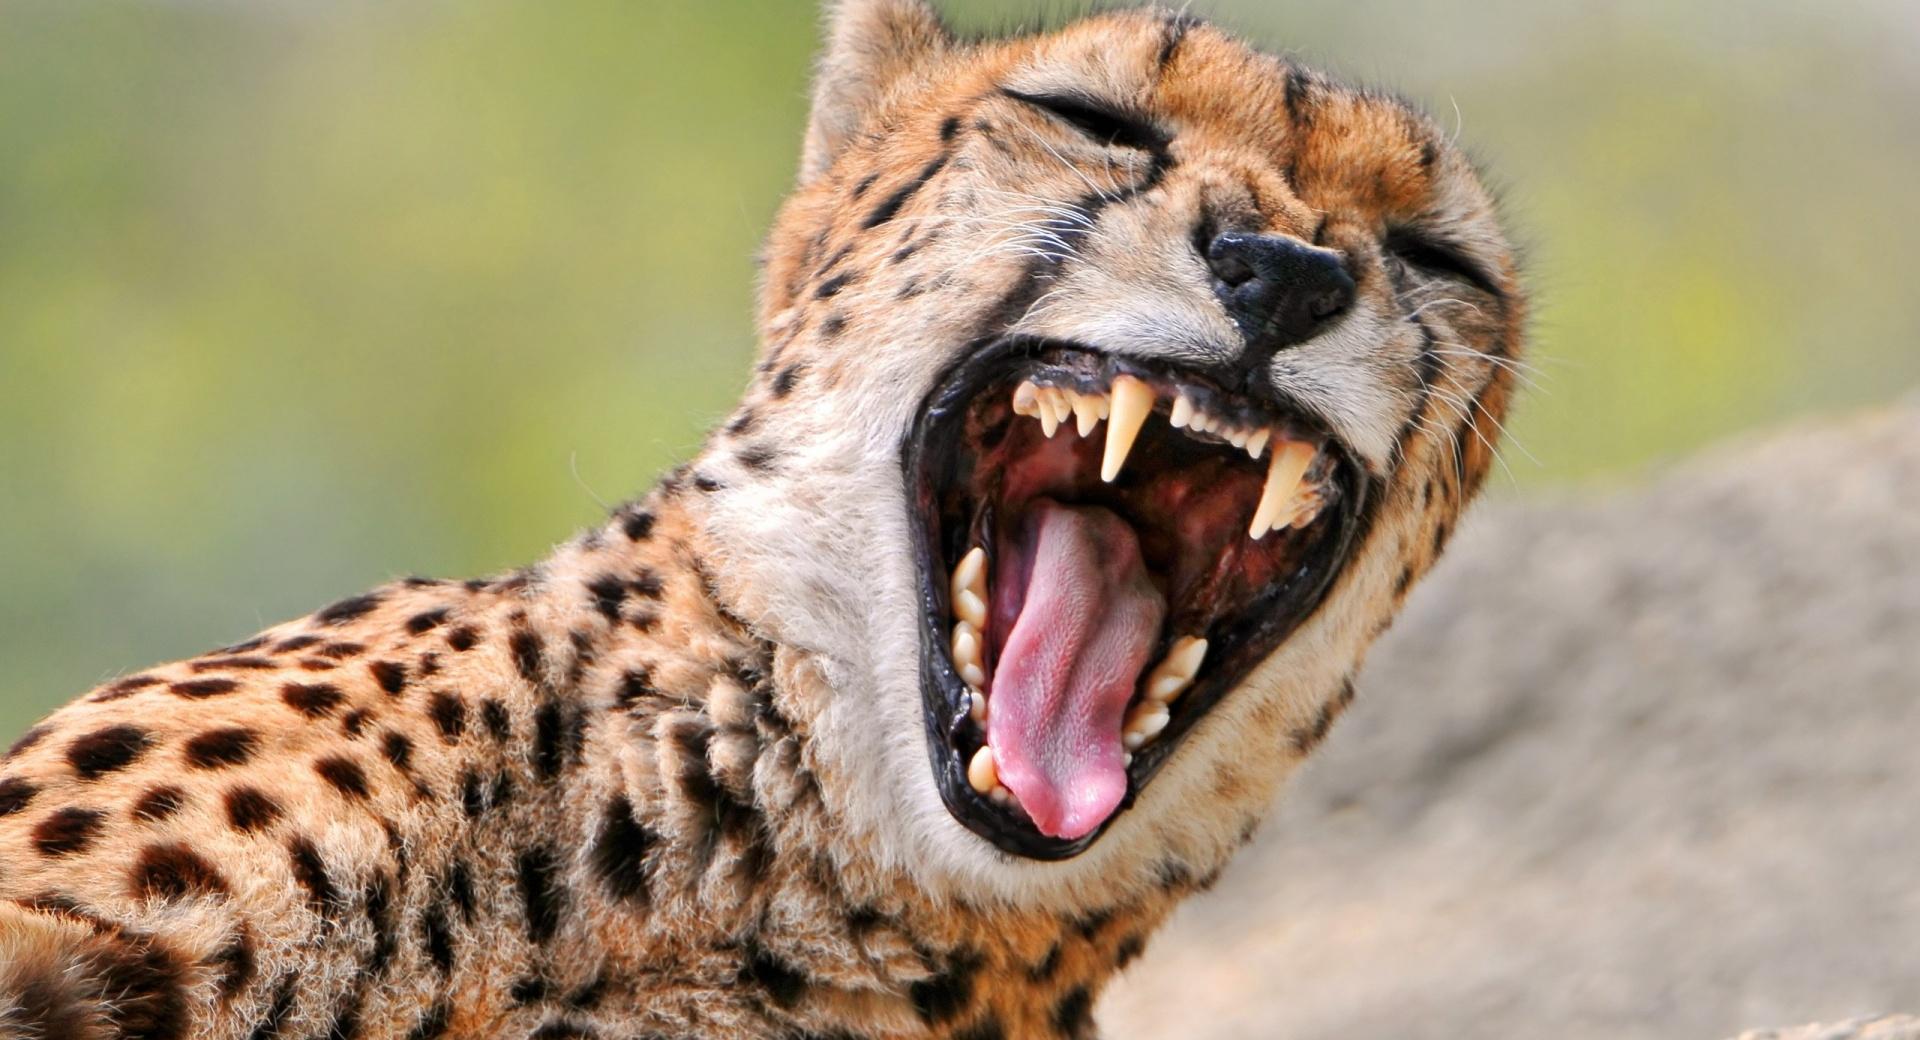 Cheetah Yawning wallpapers HD quality